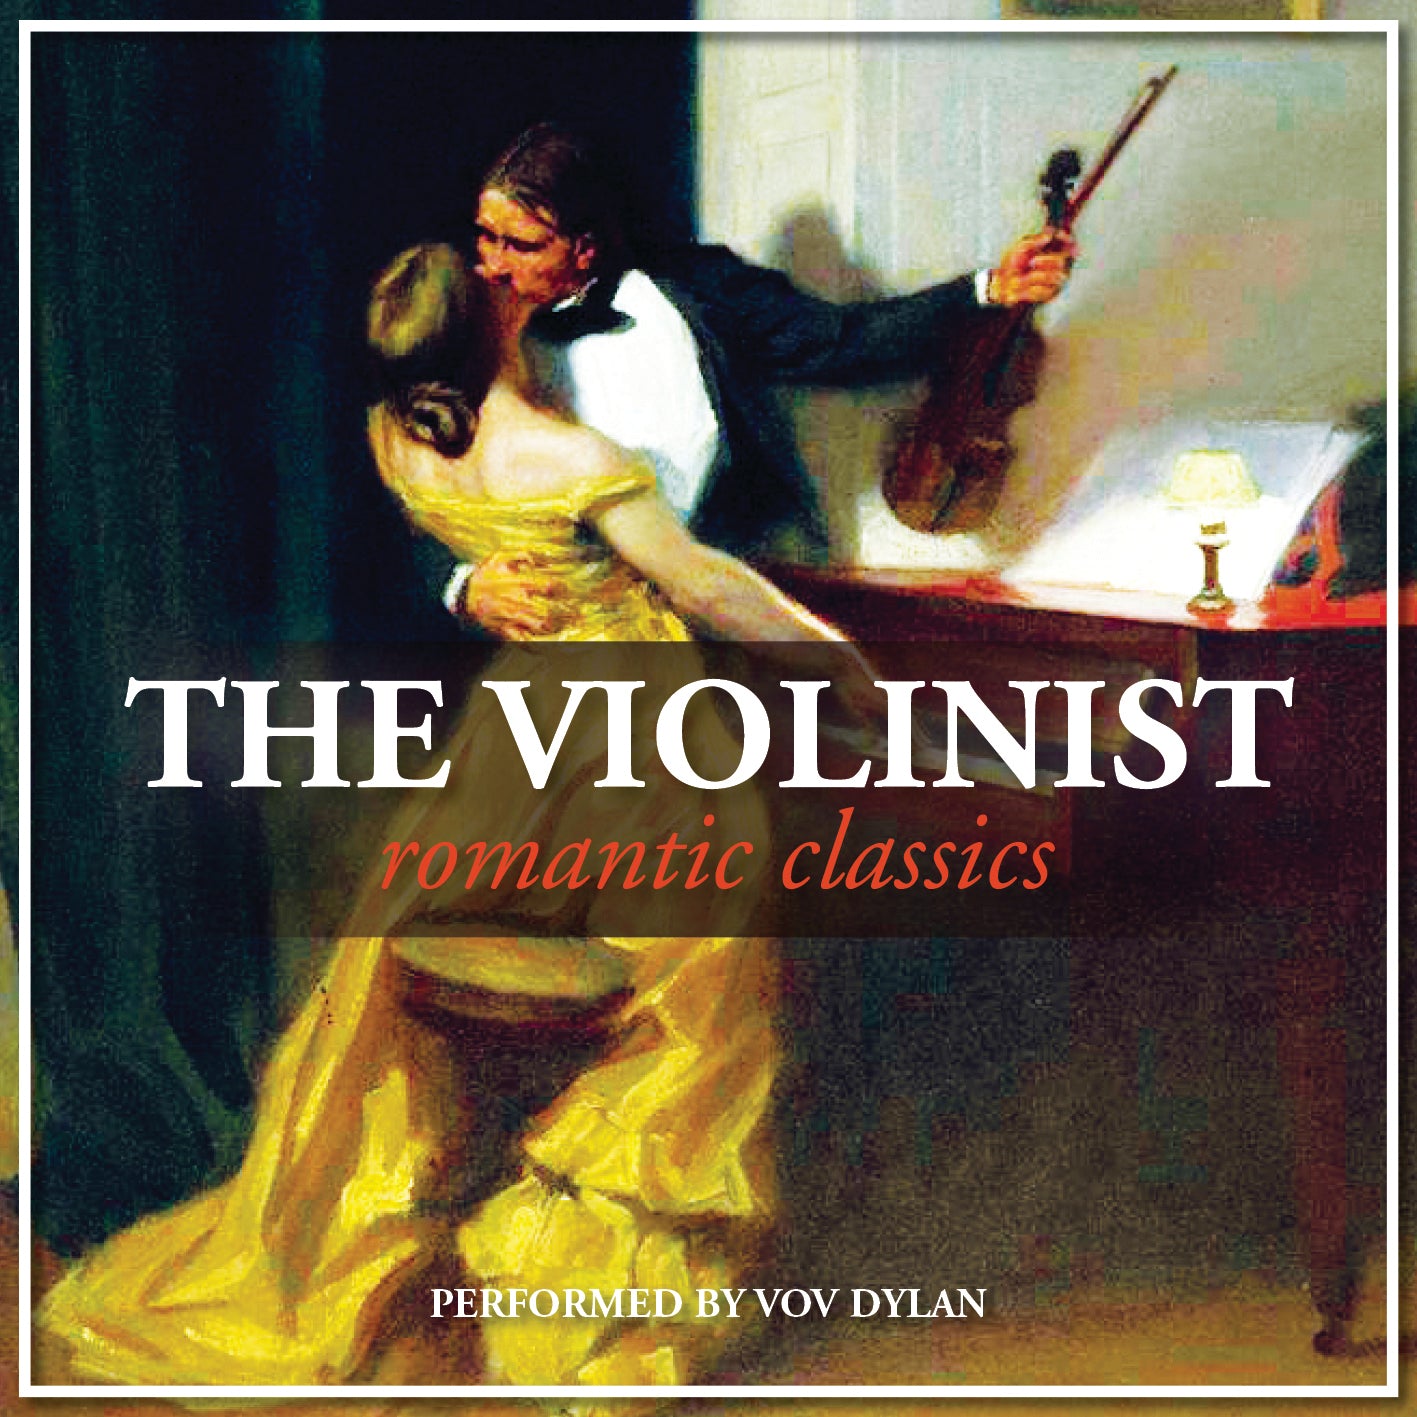 VOV DYLAN - THE VIOLINIST: ROMANTIC CLASSICS